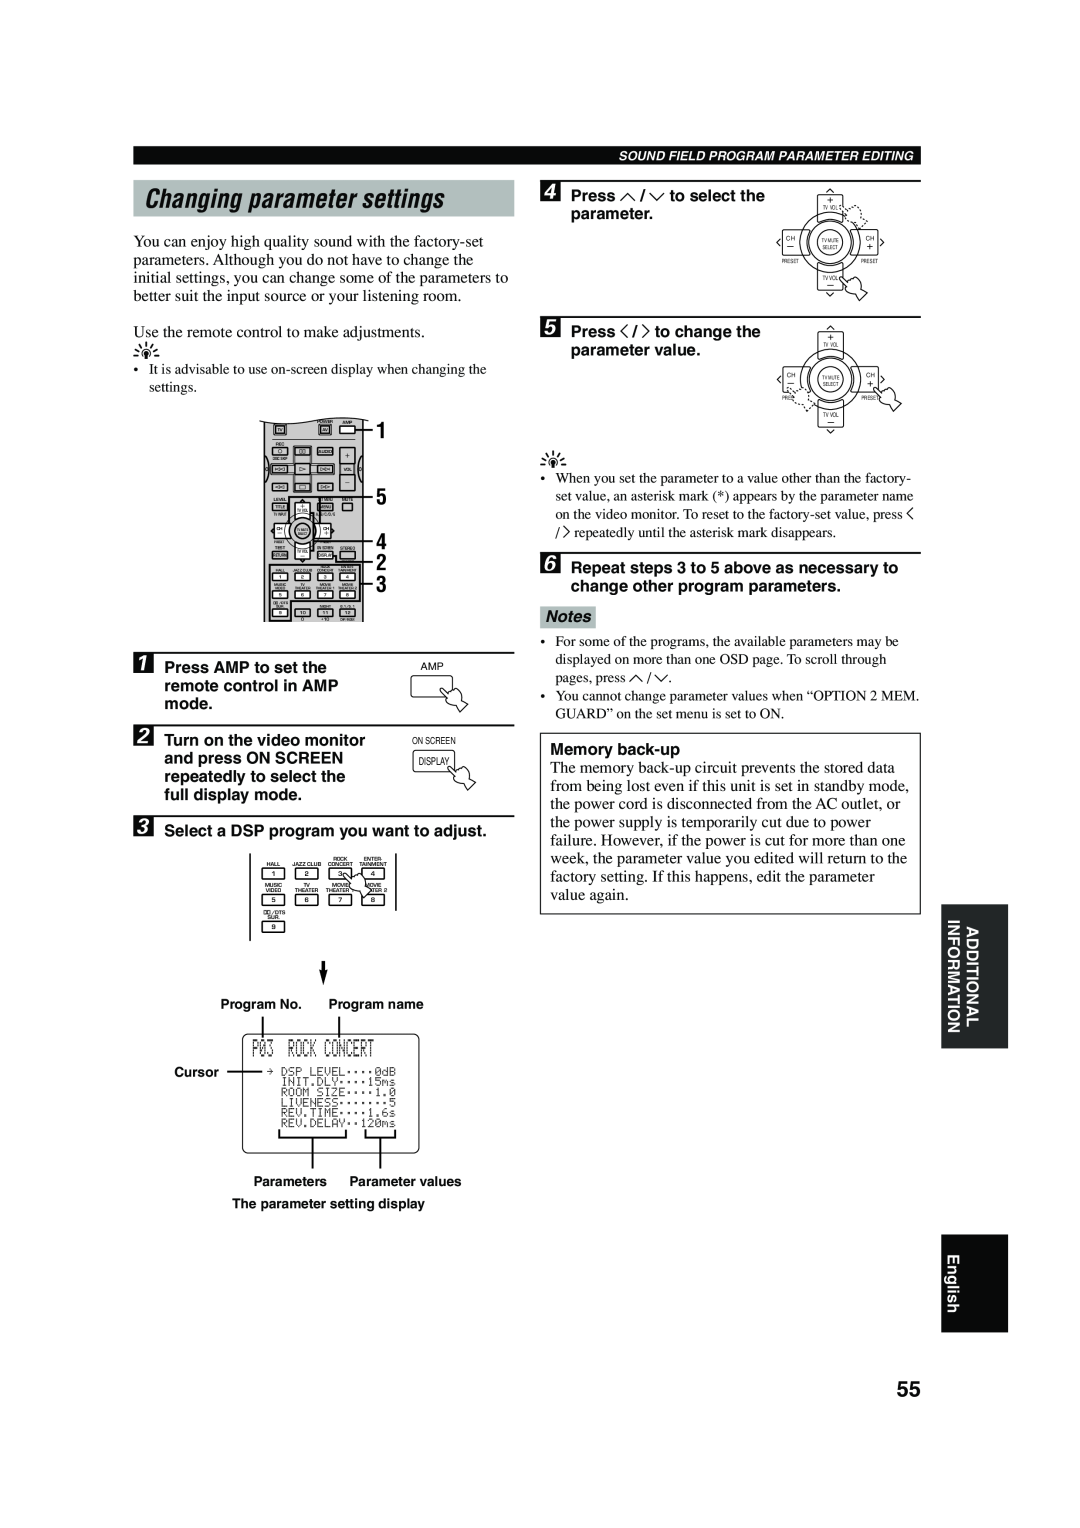 Yamaha RX-V740 owner manual Changing parameter settings, P03 ROCK CONCERT, English 